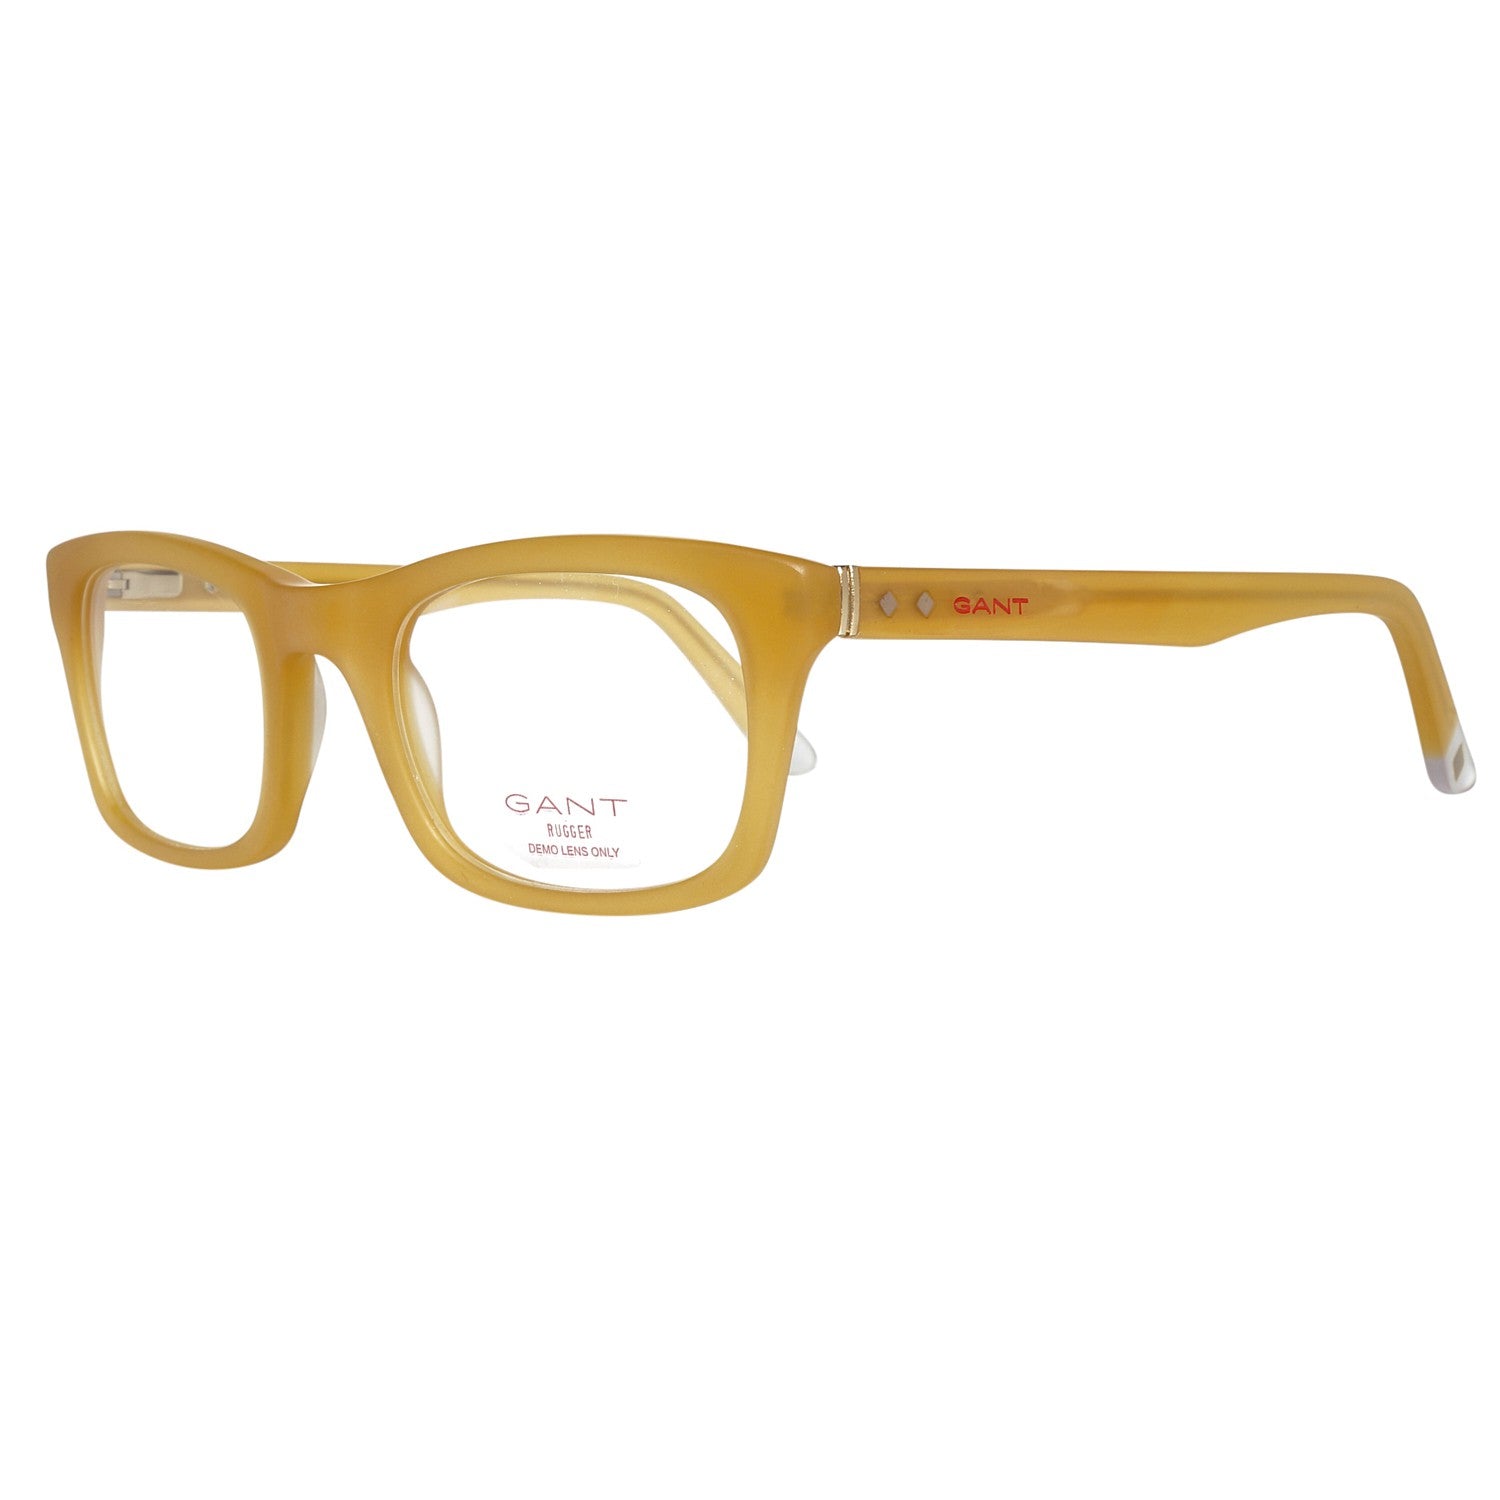 Gant Frames Gant Glasses Frames GRA103 L69 48 | GR 5007 MHNY 48 Eyeglasses Eyewear UK USA Australia 